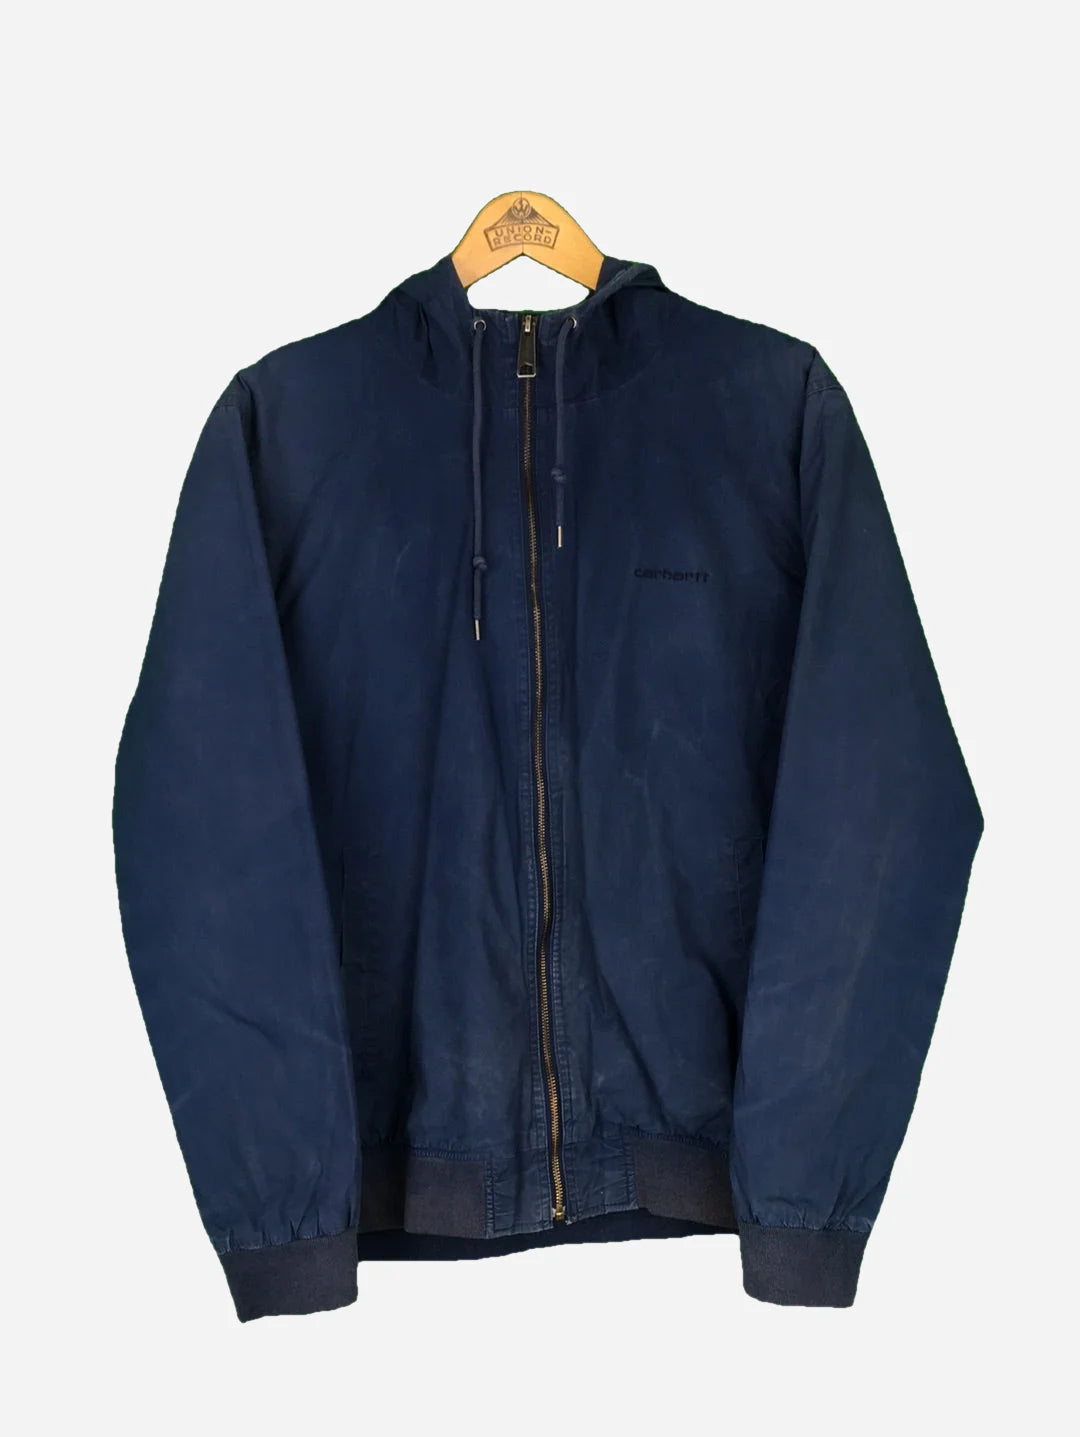 Carhartt jacket (M)